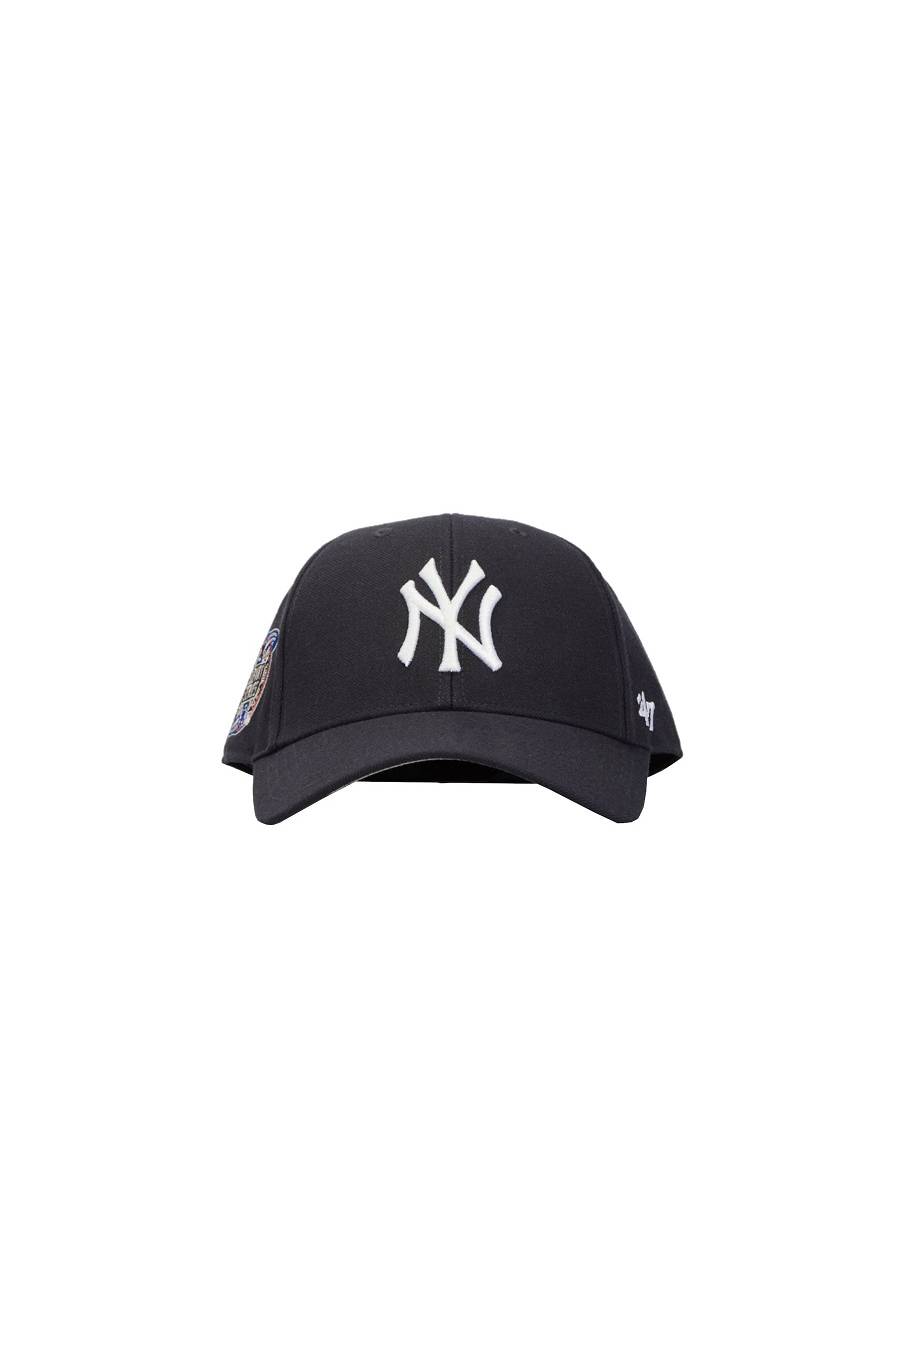 Gorra New York Yankees MLB Sure Shot